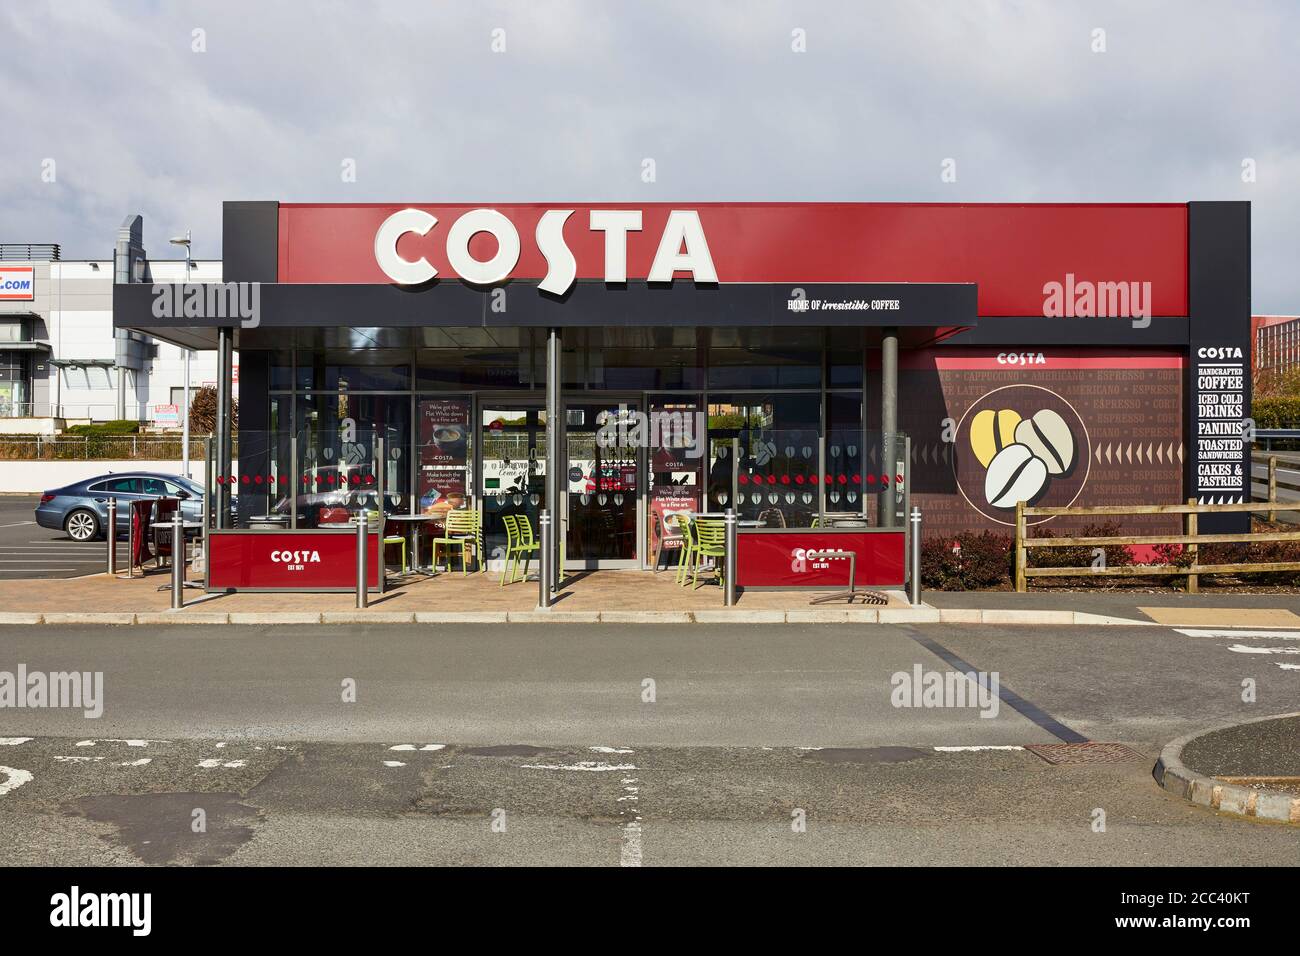 Costa. Abbey Retail Park, Belfast, Belfast, Ireland. Architect: N/A, 2019. Stock Photo